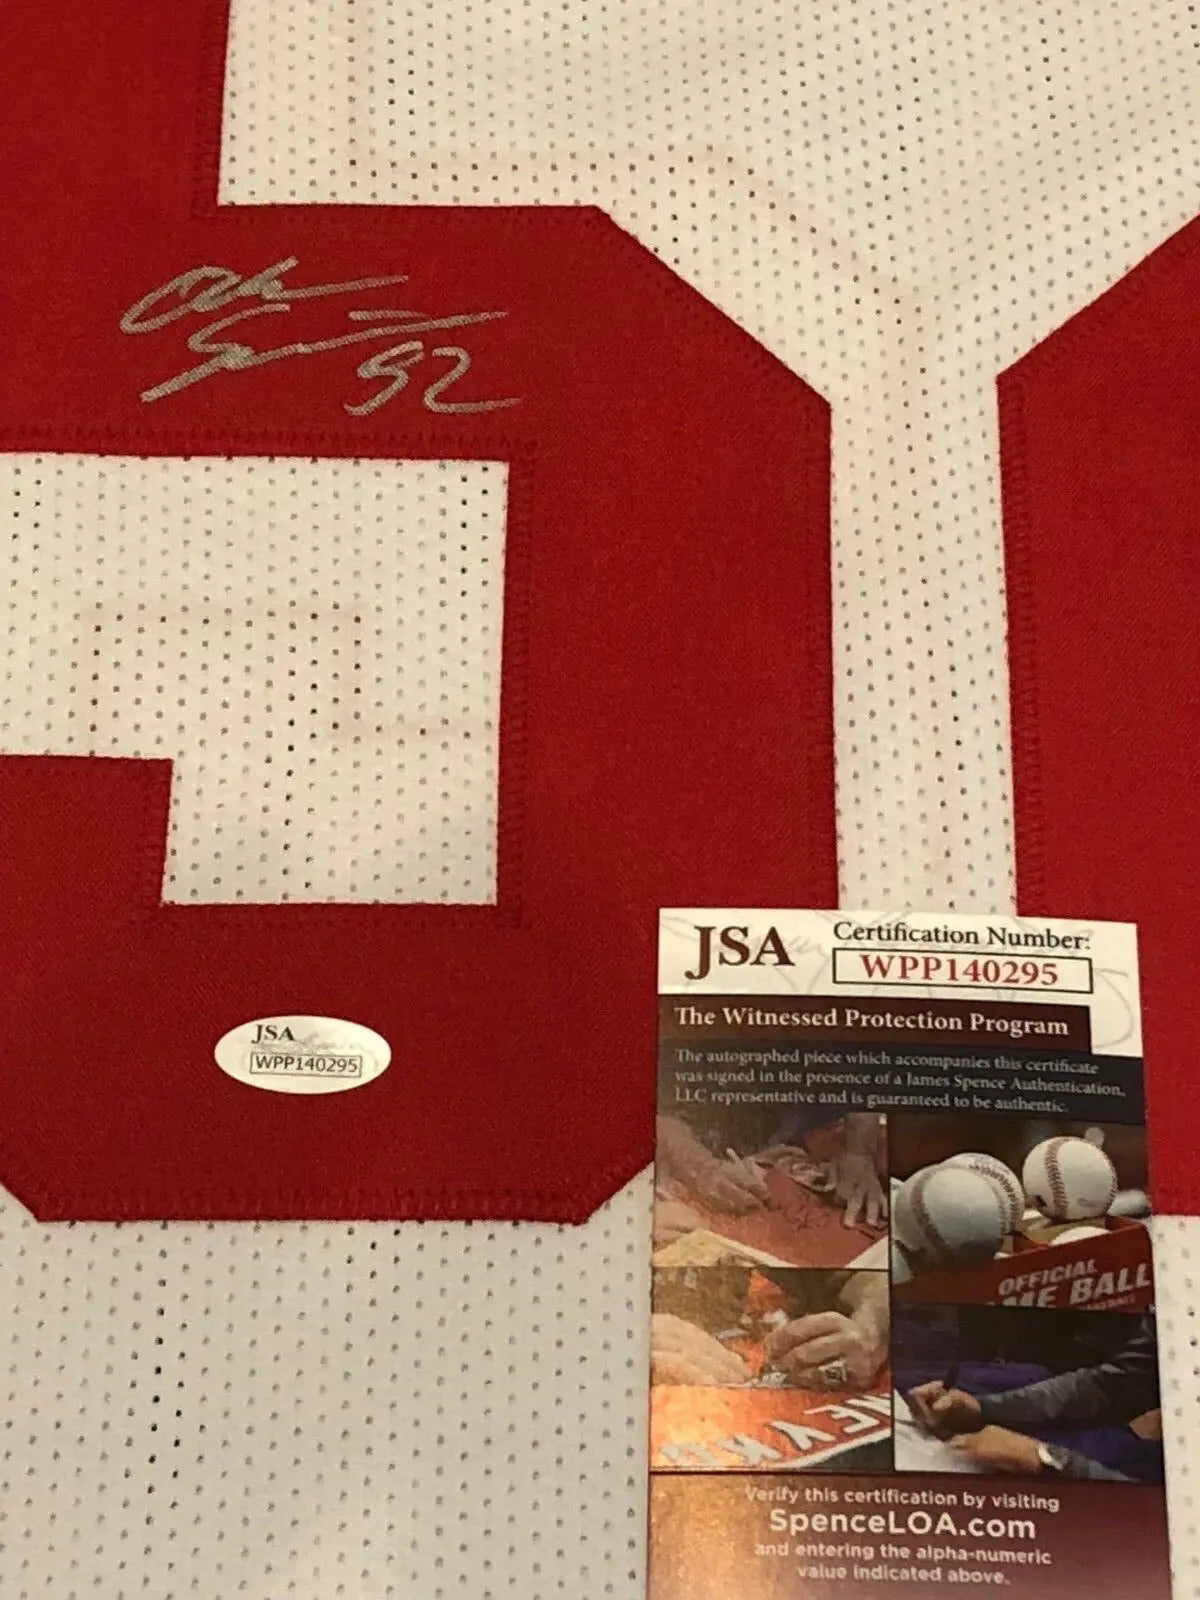 MVP Authentics N.Y. Giants Alec Ogletree Autographed Signed Jersey Jsa Coa 53.10 sports jersey framing , jersey framing